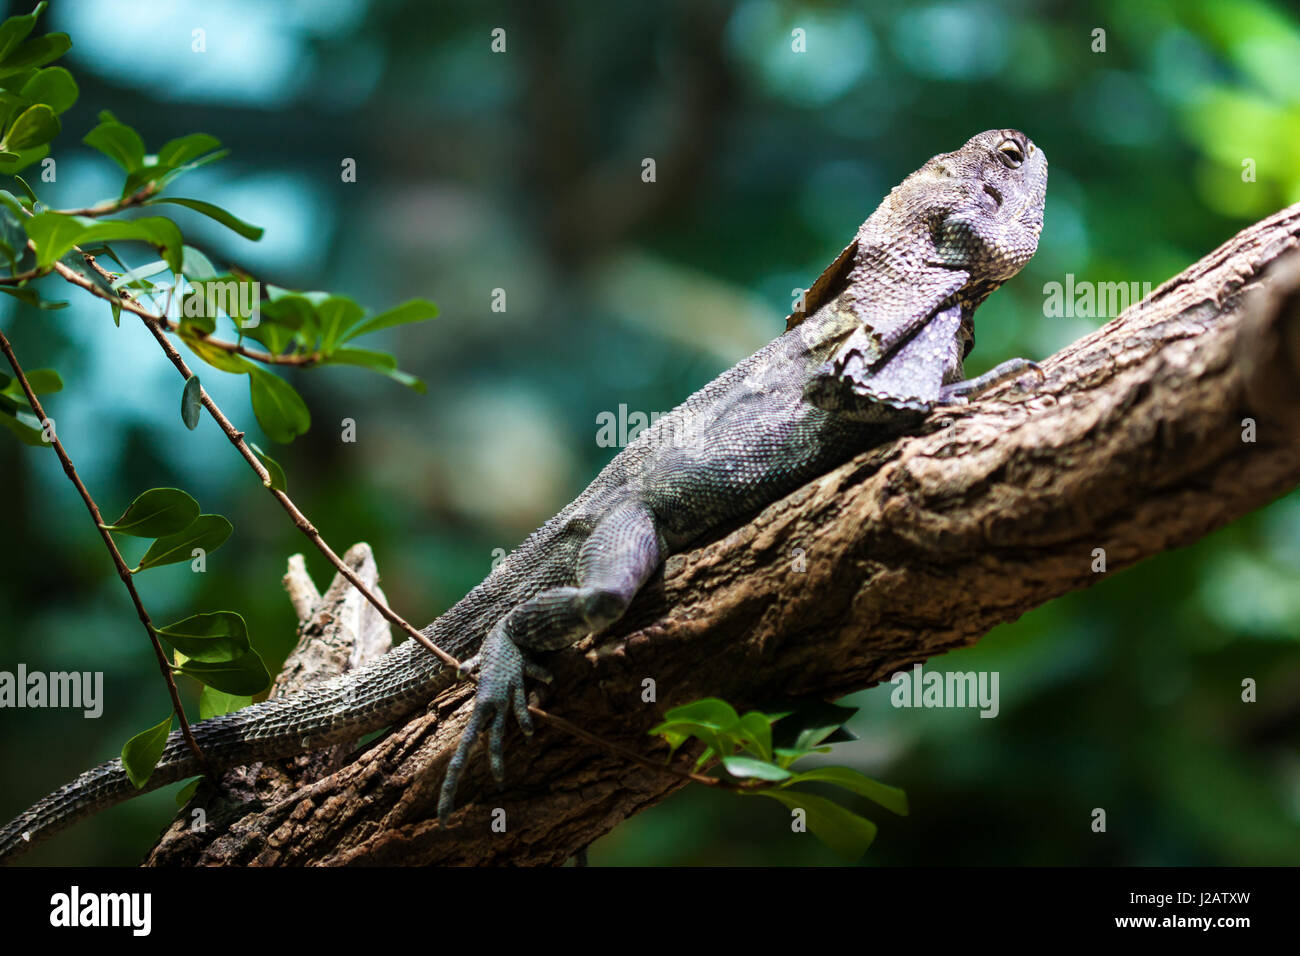 Frill-necked lizard (Chlamydosaurus kingii) against green background. Stock Photo